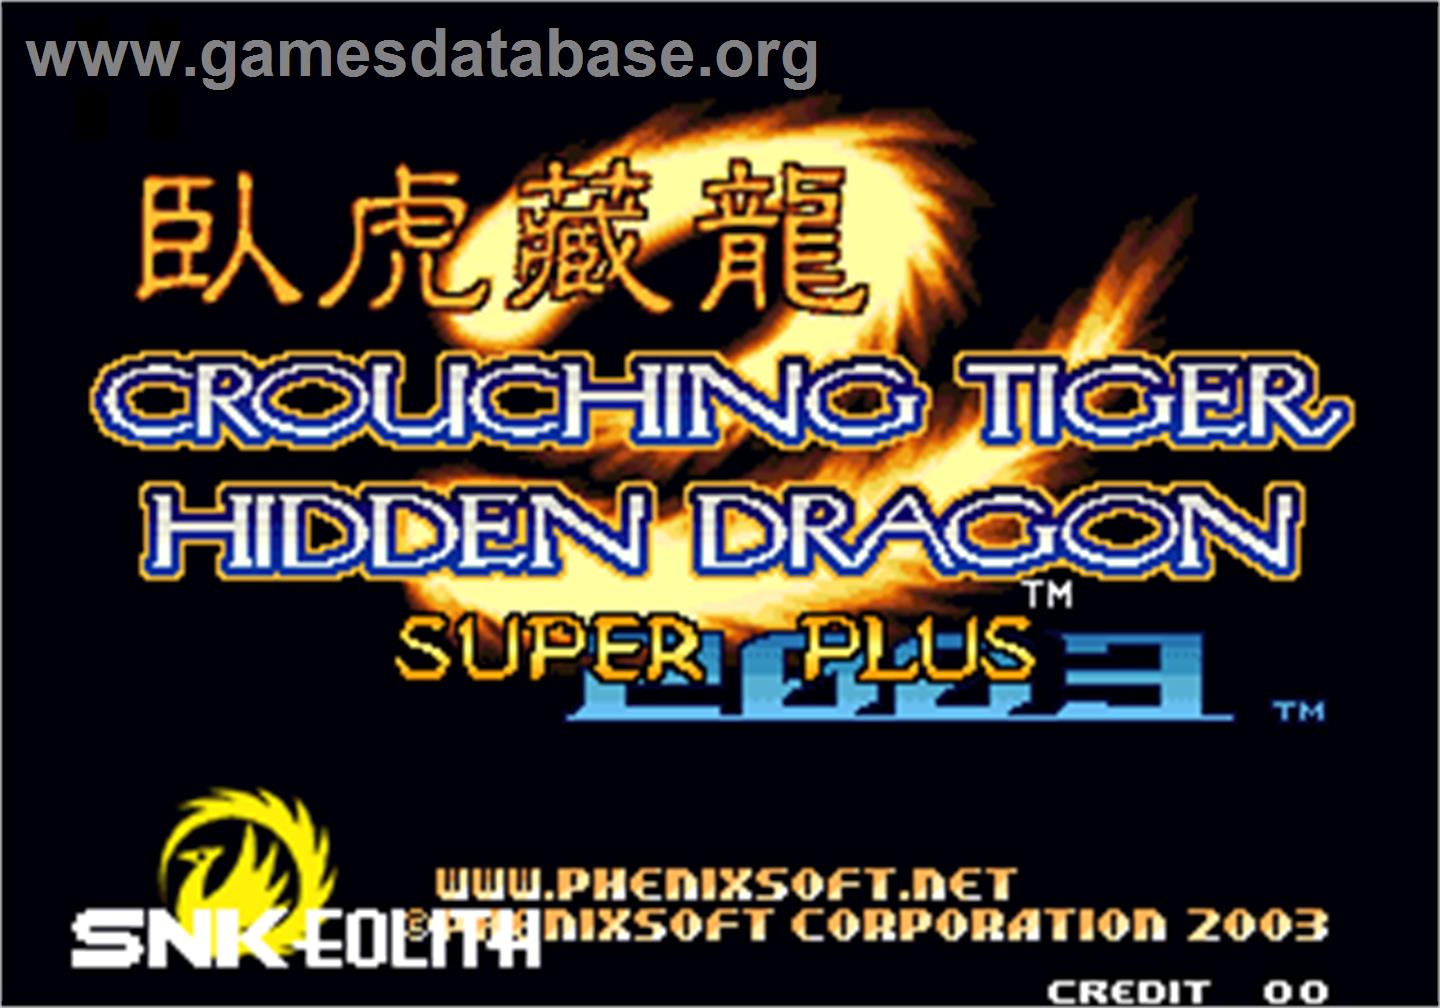 Crouching Tiger Hidden Dragon 2003 Super Plus alternate - Arcade - Artwork - Title Screen